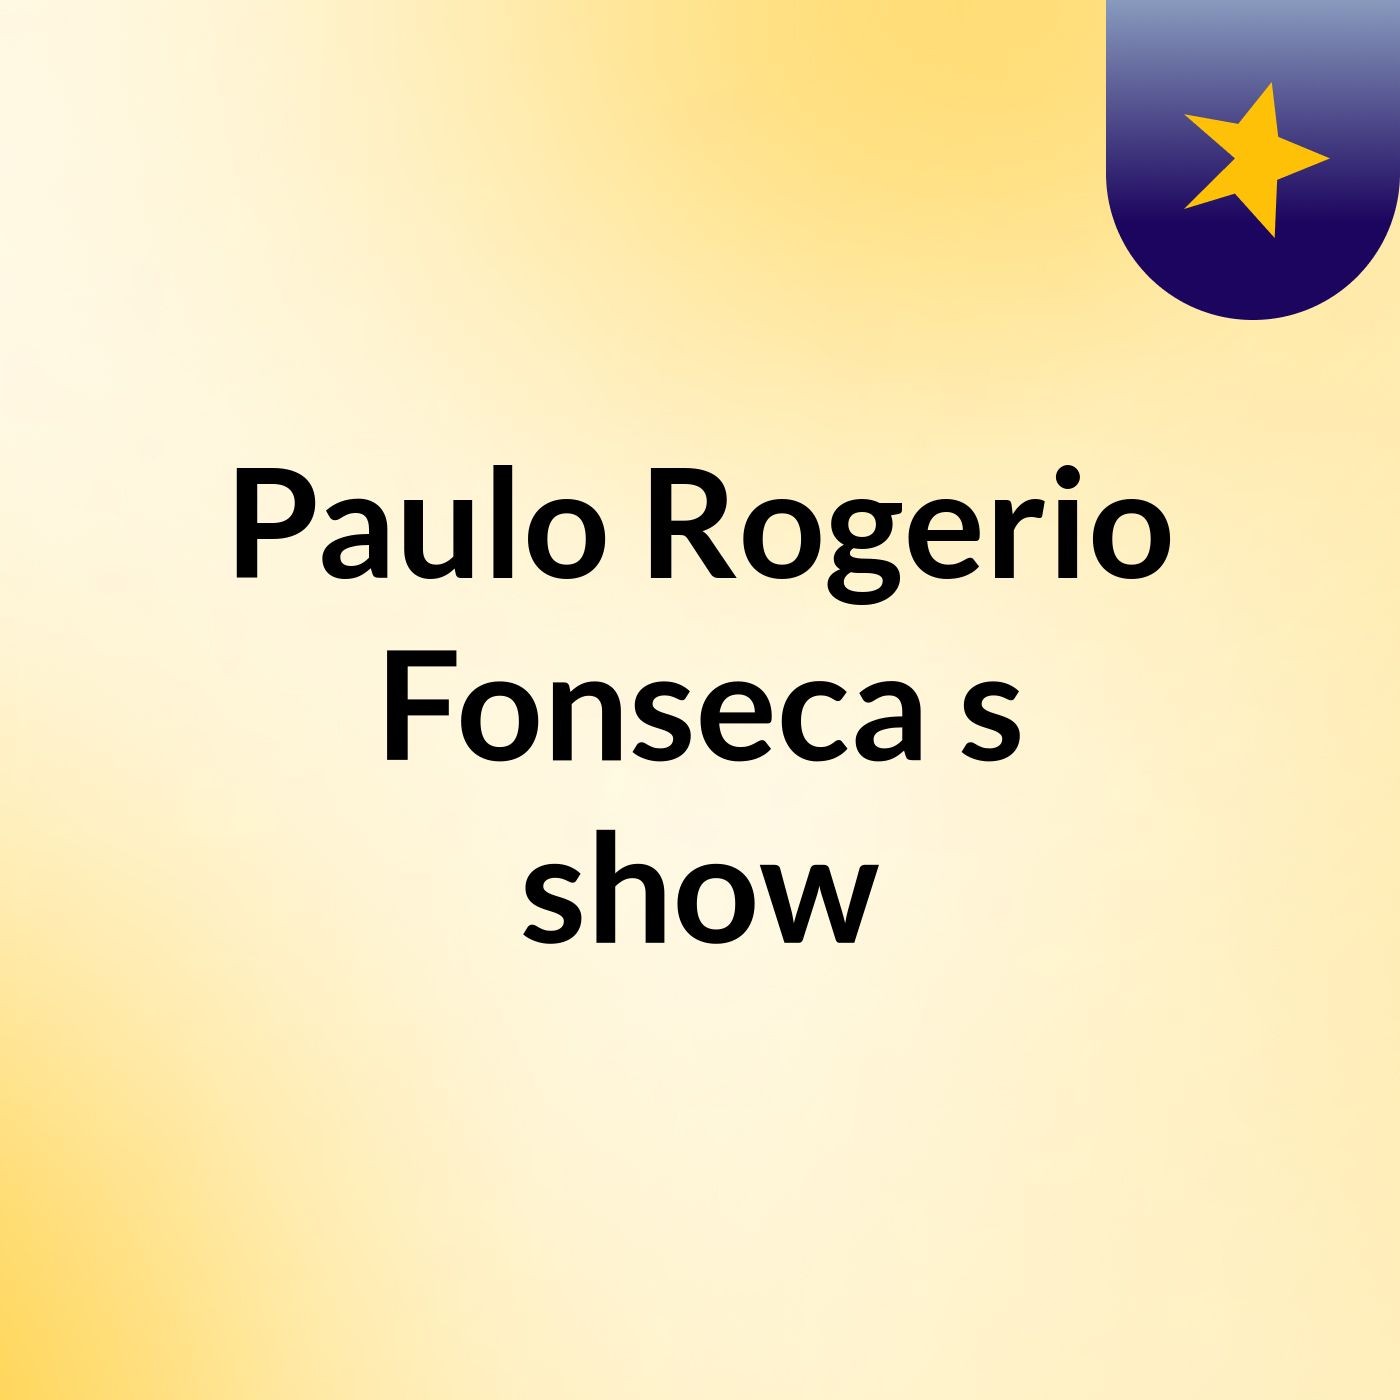 Paulo Rogerio Fonseca's show